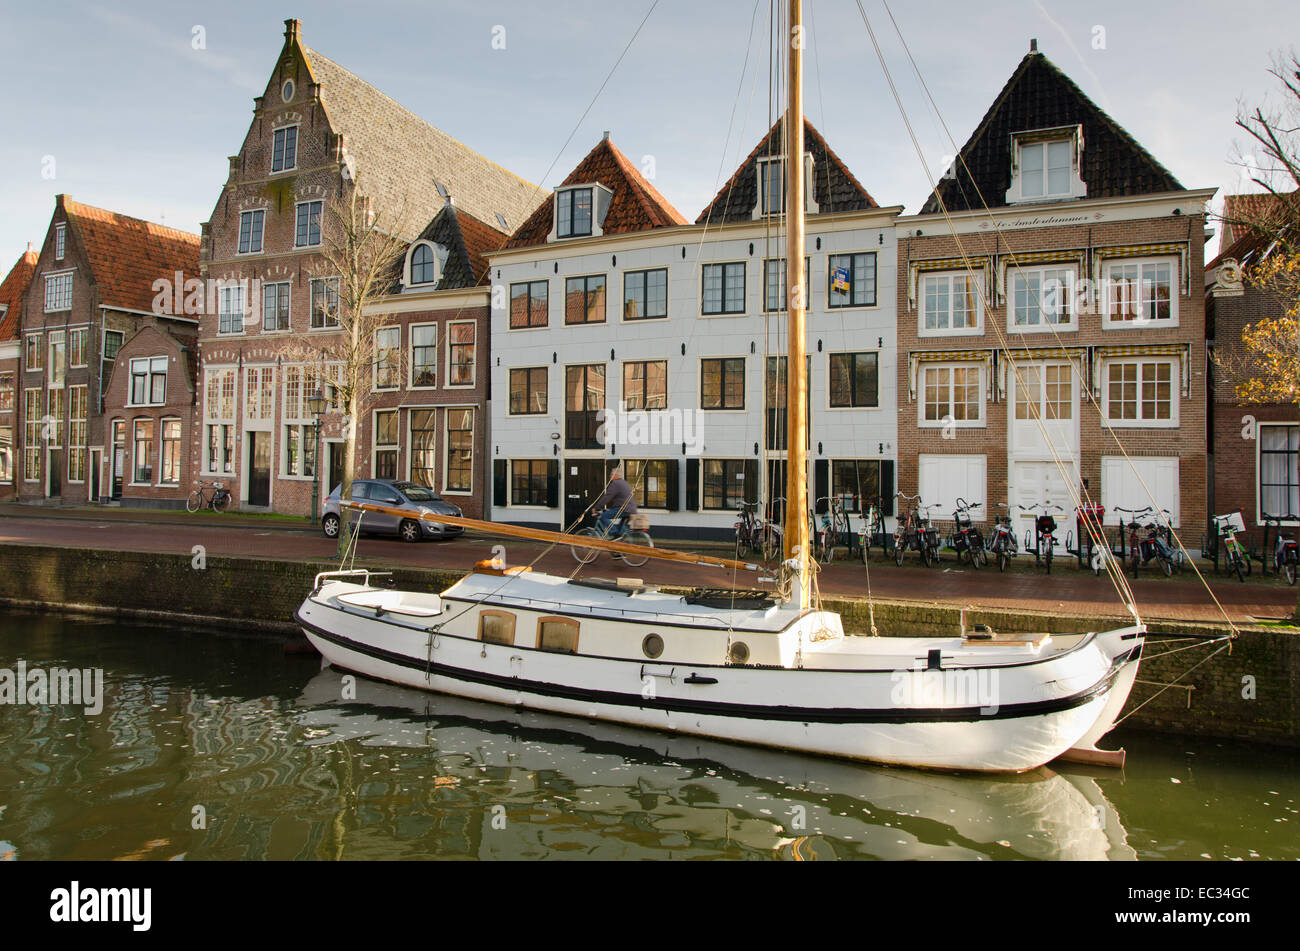 HOORN, Paesi Bassi - 22 ottobre: nave a vela al di ancoraggio in un canale navigabile su ottobre 22, 2013 in Hoorn, Paesi Bassi Foto Stock